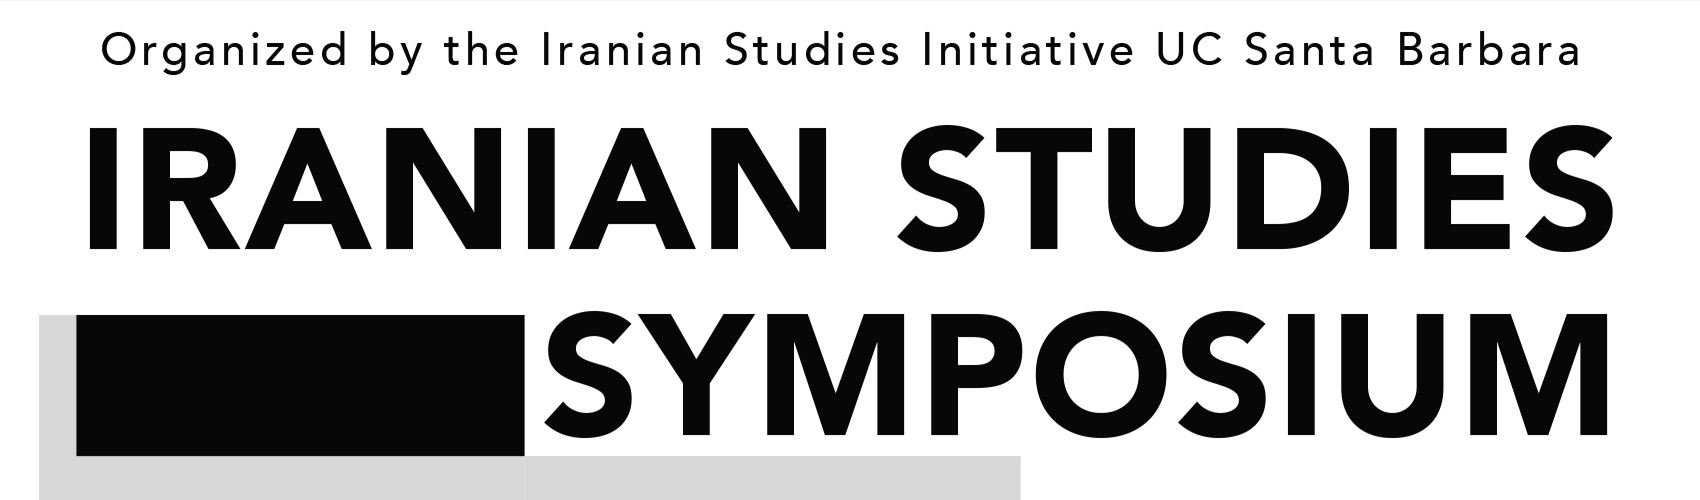 Organized by the Iranian Studies Initiative UC Santa Barbara: Iranian Studies Symposium